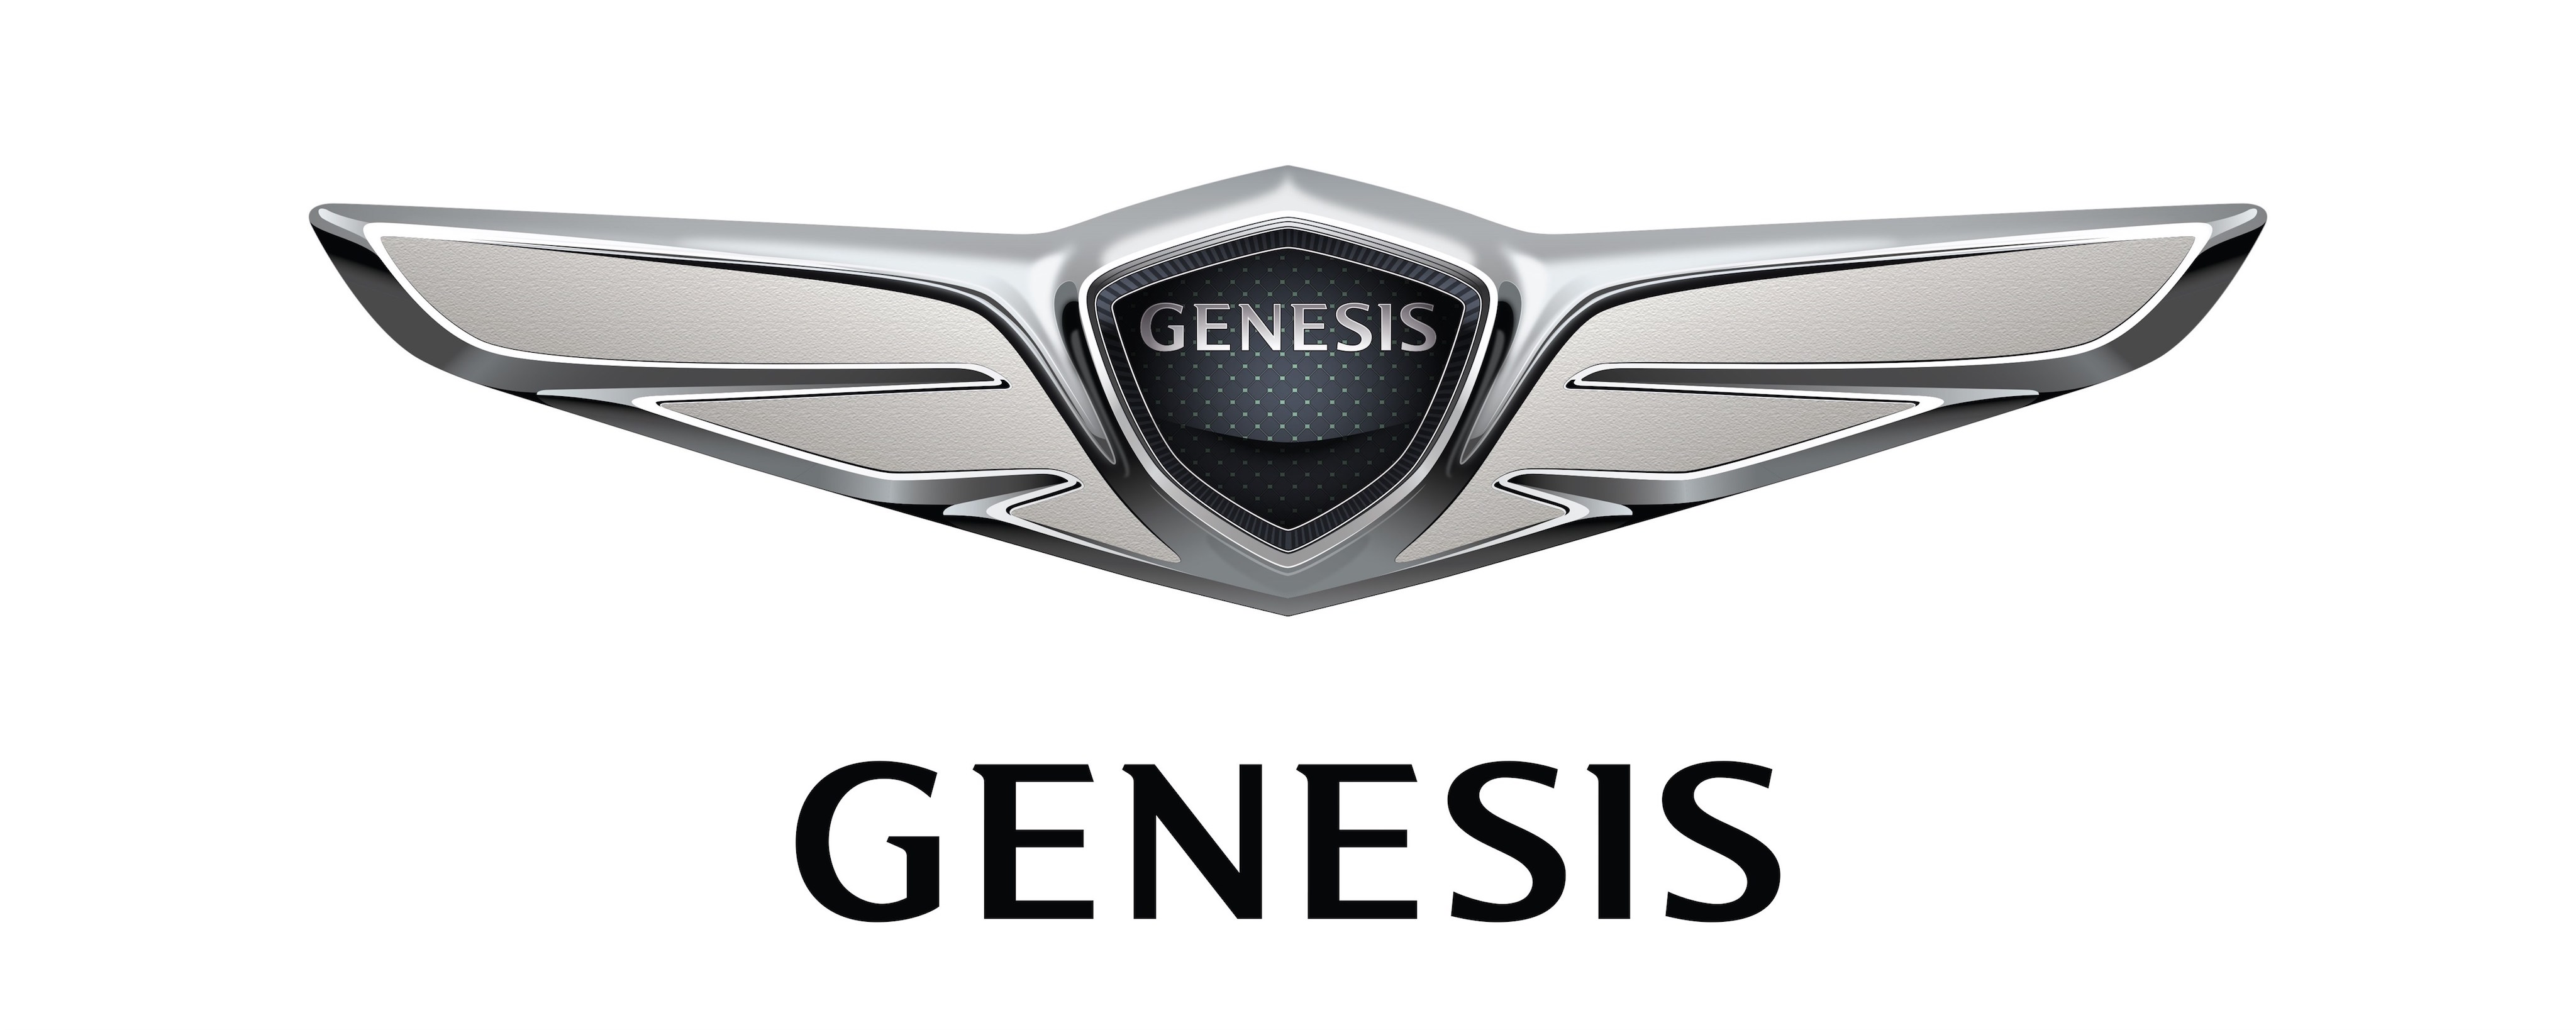 find a vehicle new genesis inventory genesis usa on genesis car logo svg